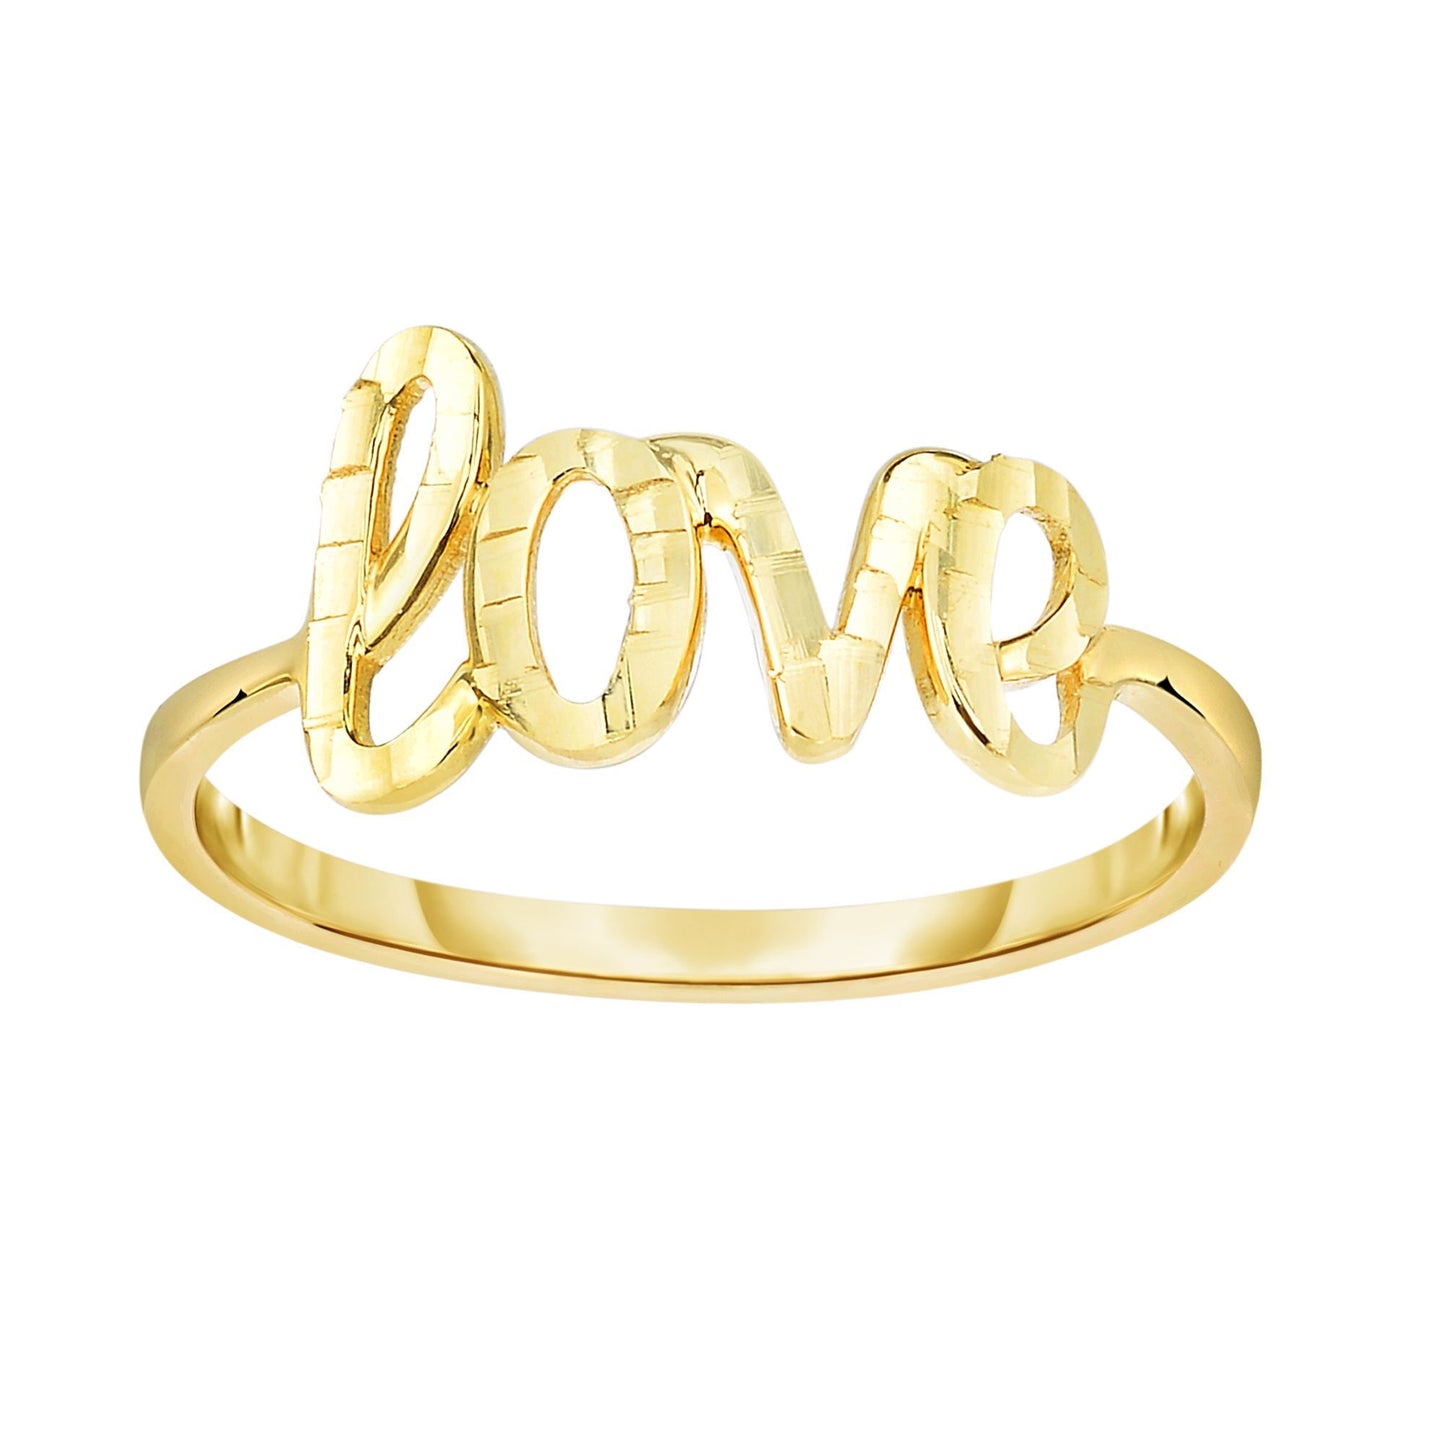 14K Yellow Gold "Love" Ring